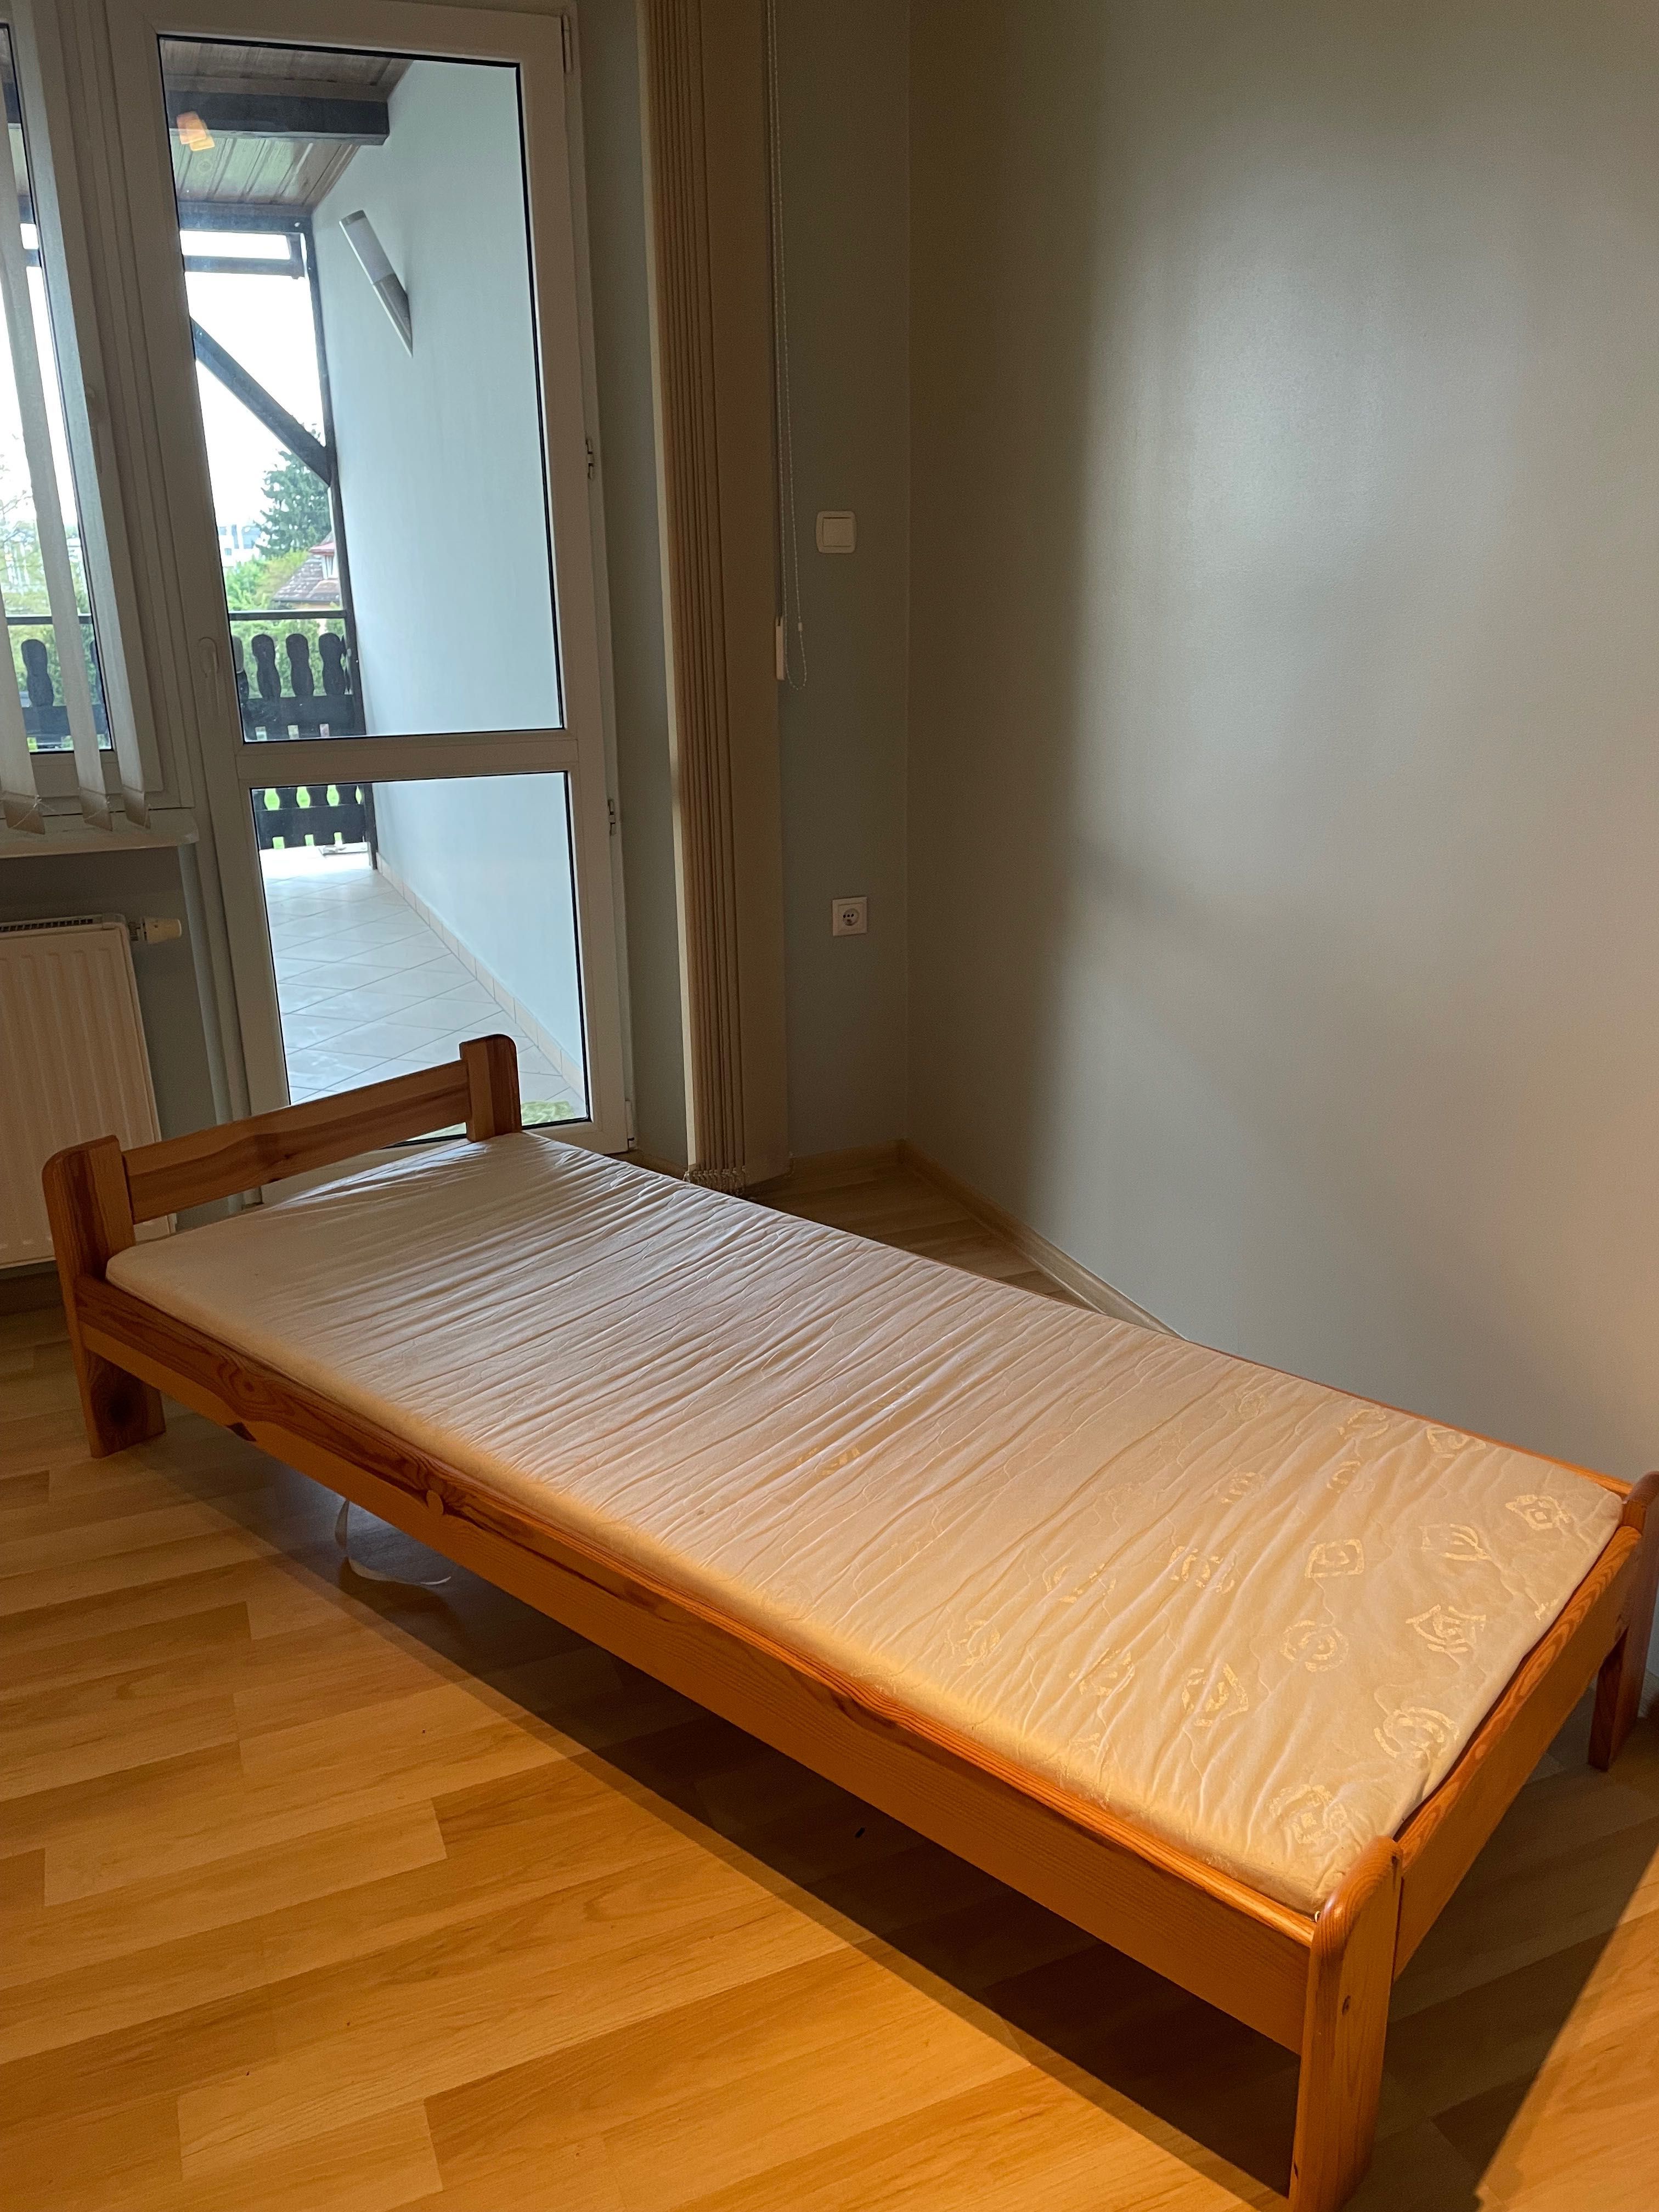 Łóżko sosnowe z materacem 80 x 200 bdb